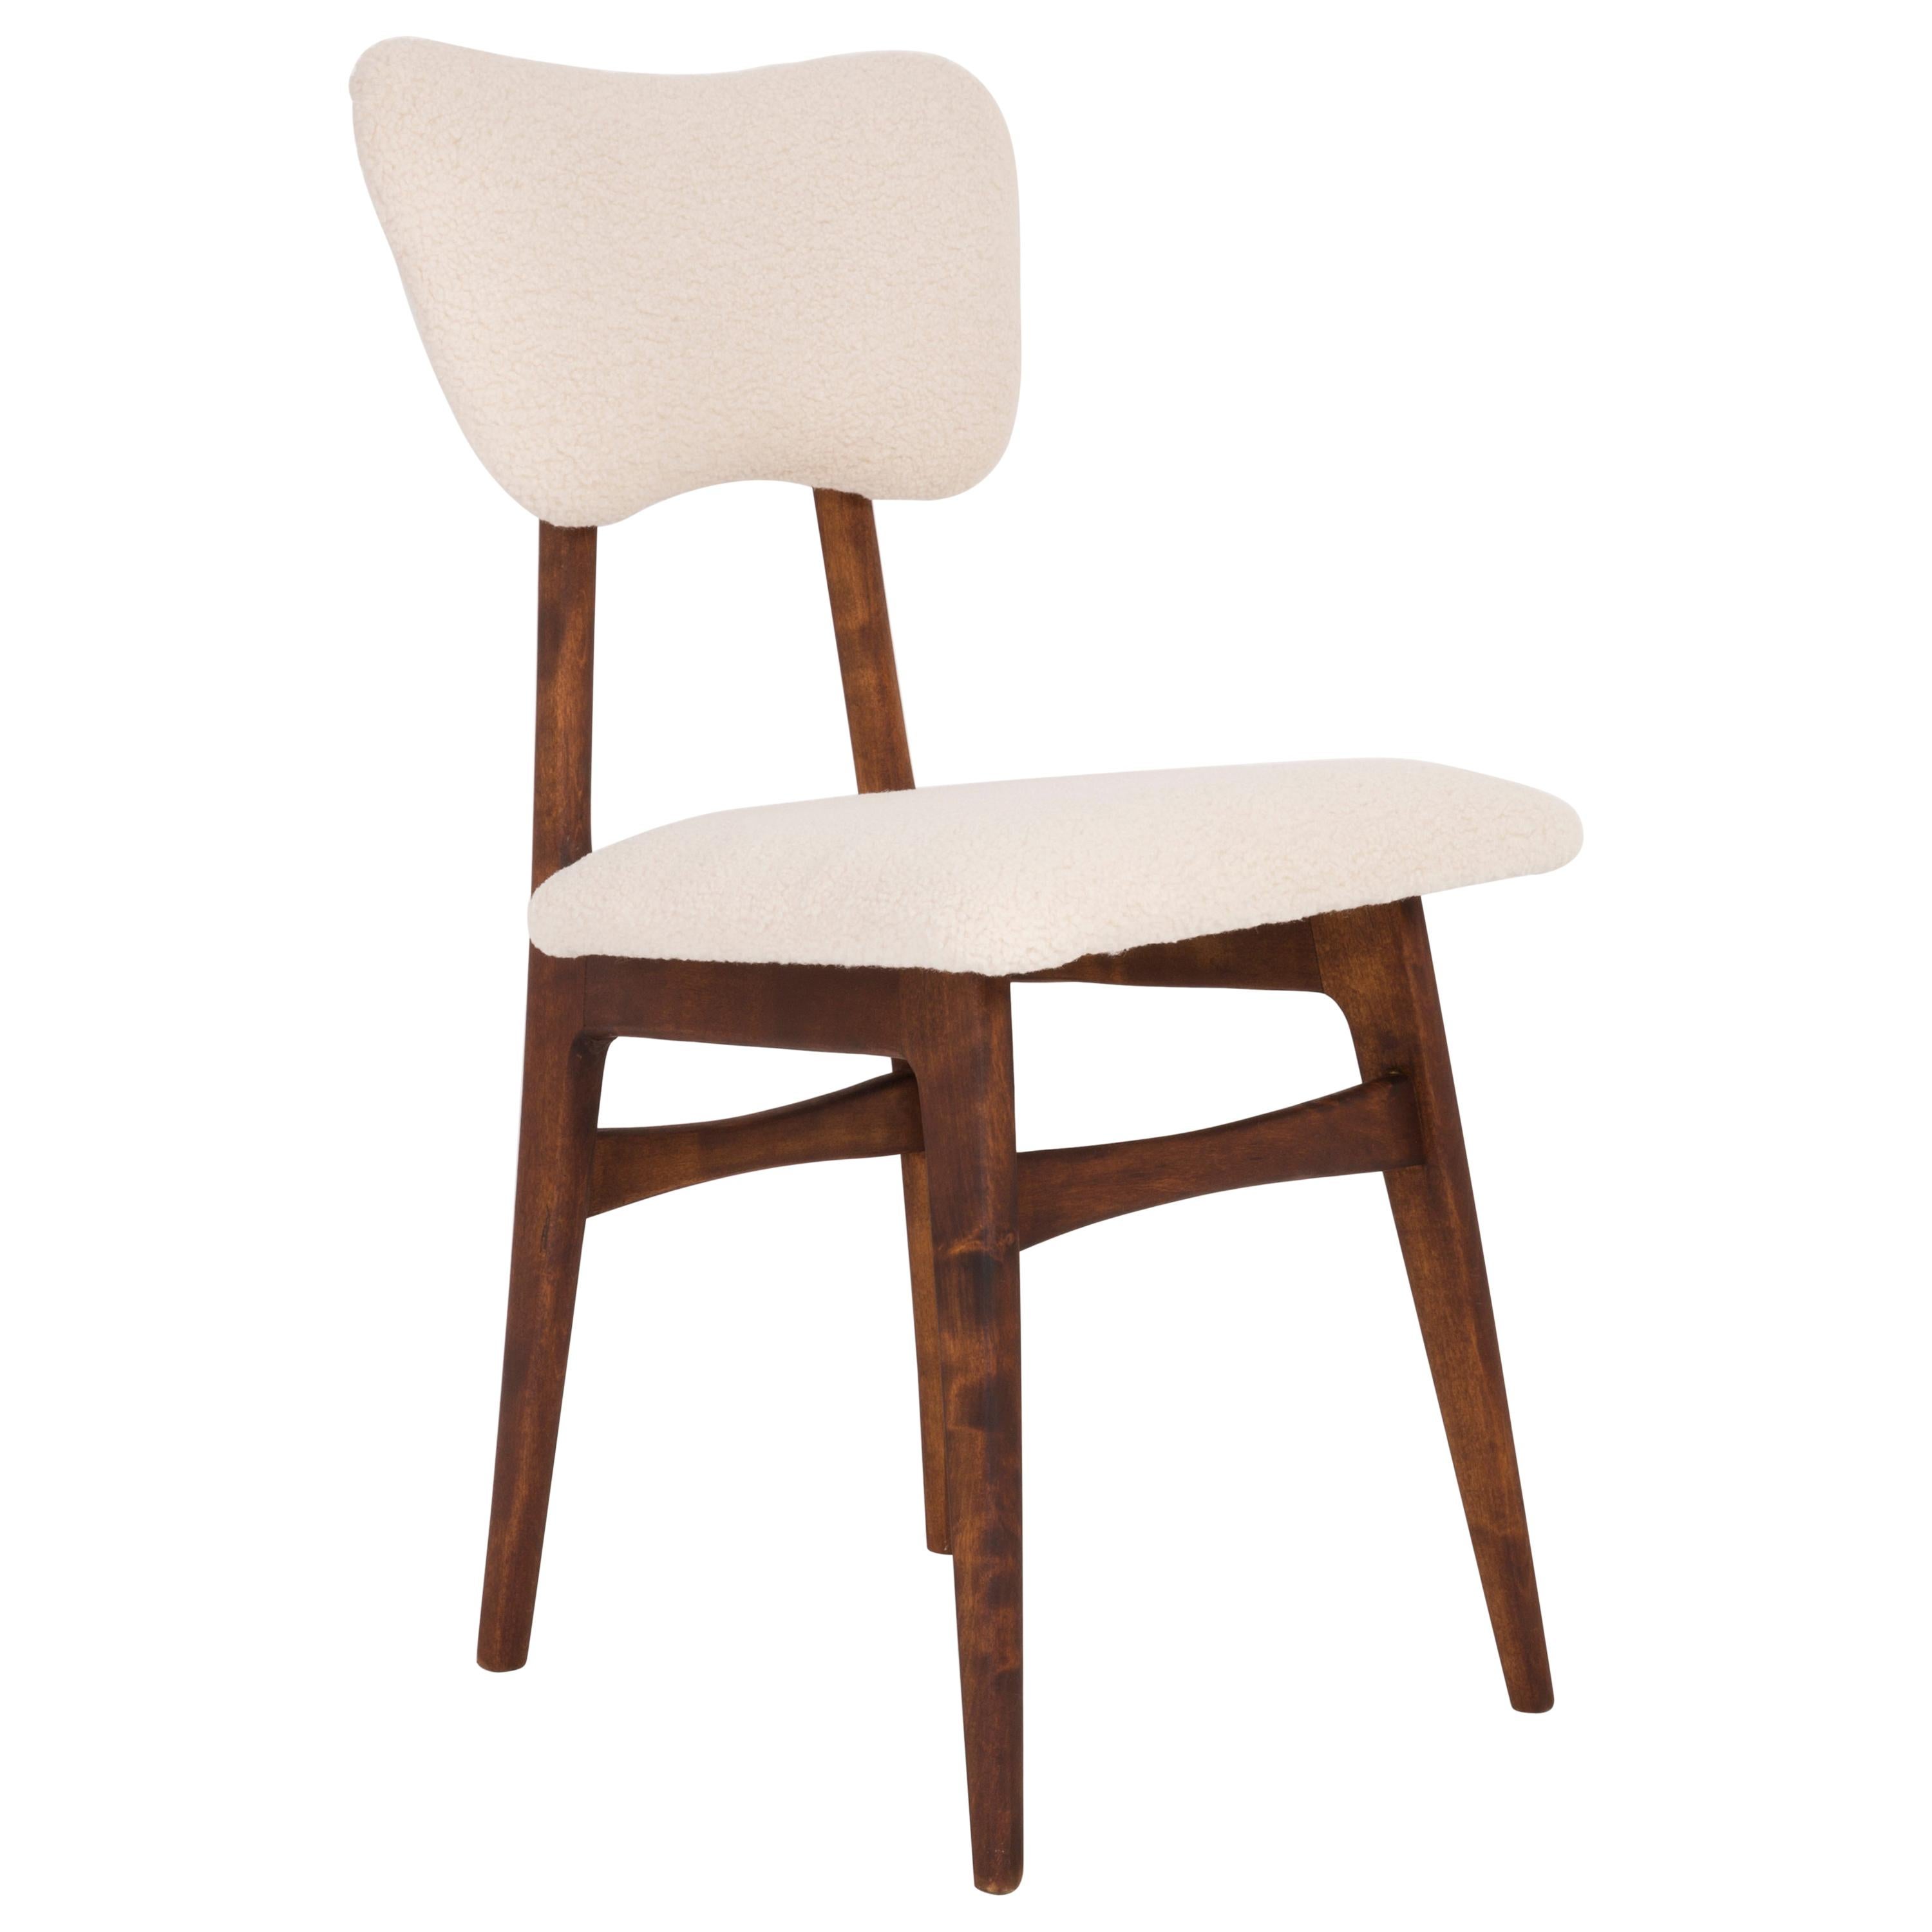 Light Crme Boucle-Stuhl des 20. Jahrhunderts, 1960er Jahre